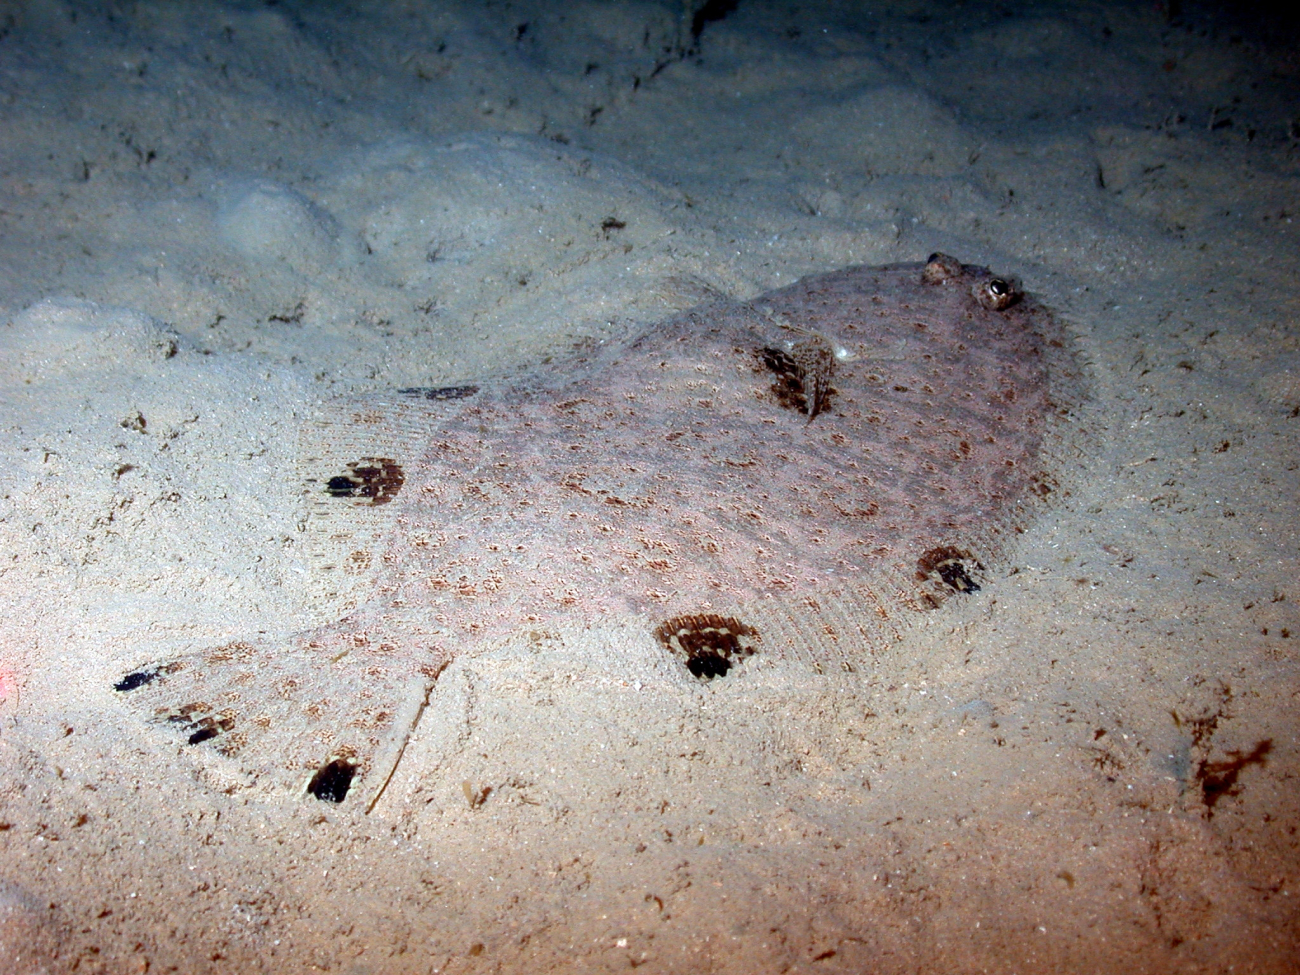 A flatfish camouflaged on the seafloor